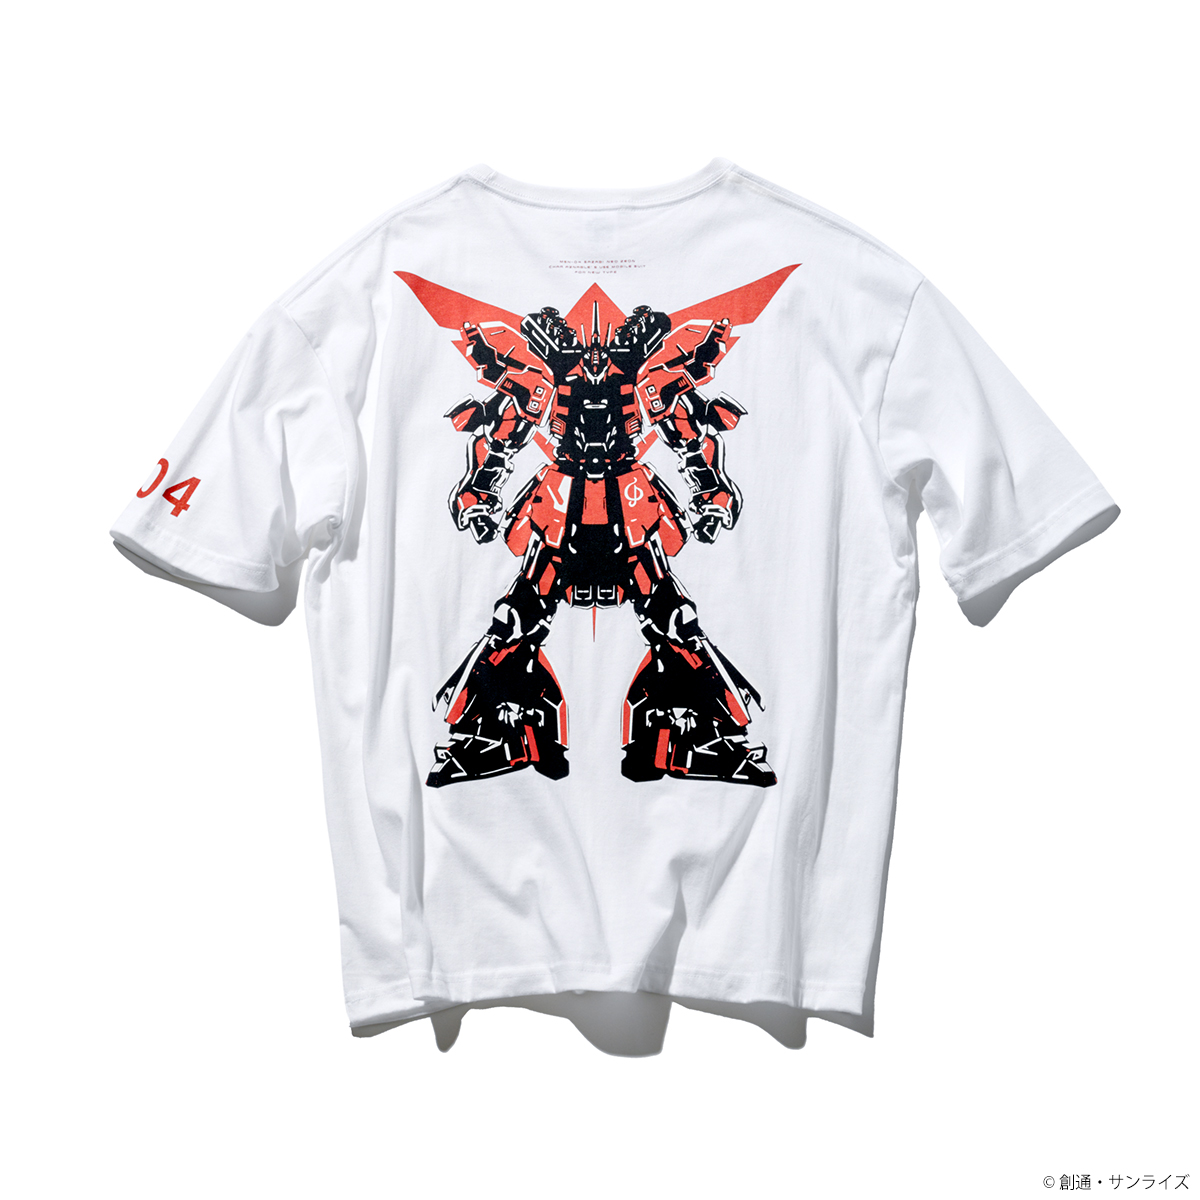 STRICT-G『機動戦士ガンダム 逆襲のシャア』ポケット付きビッグ Tシャツ サザビー